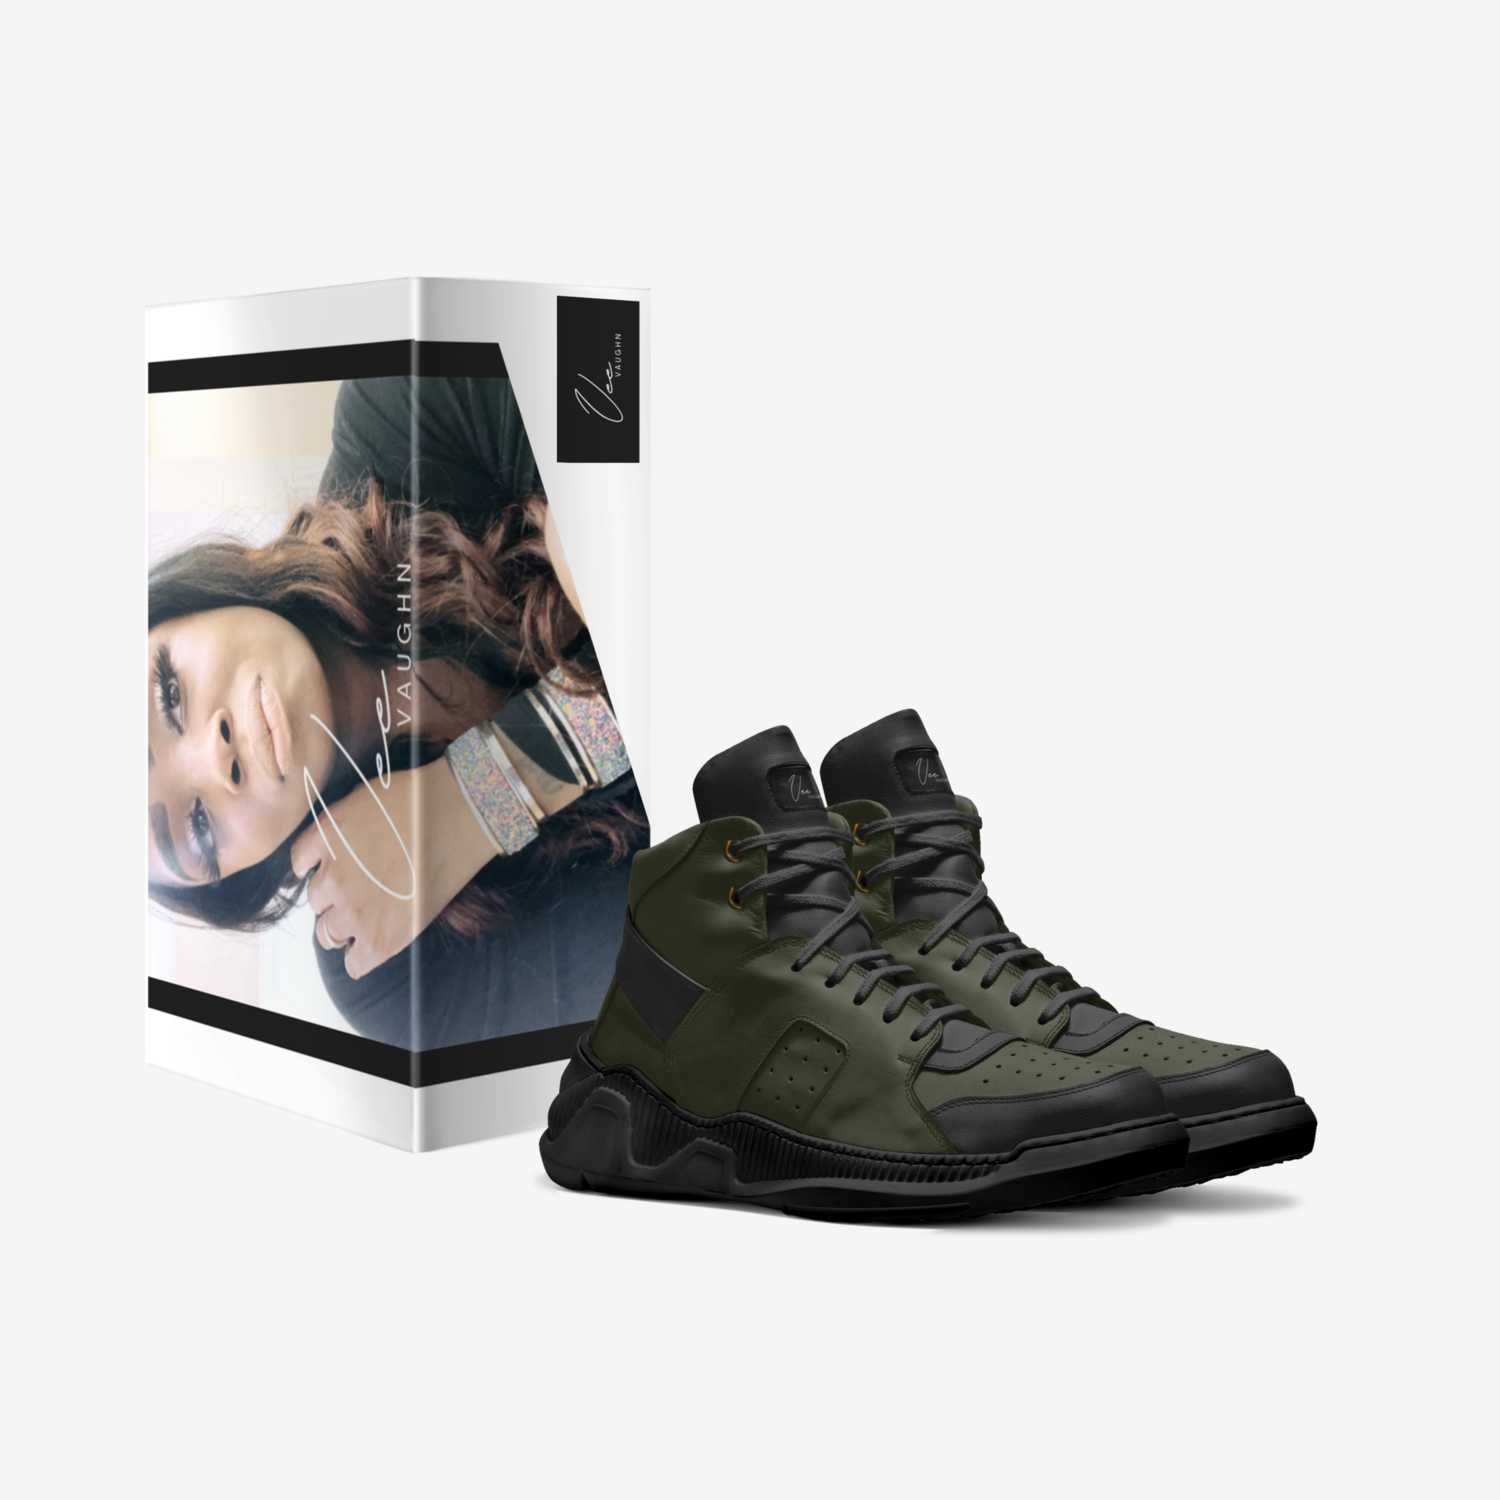 Vee Vaughn custom made in Italy shoes by Veorna Vaughn | Box view